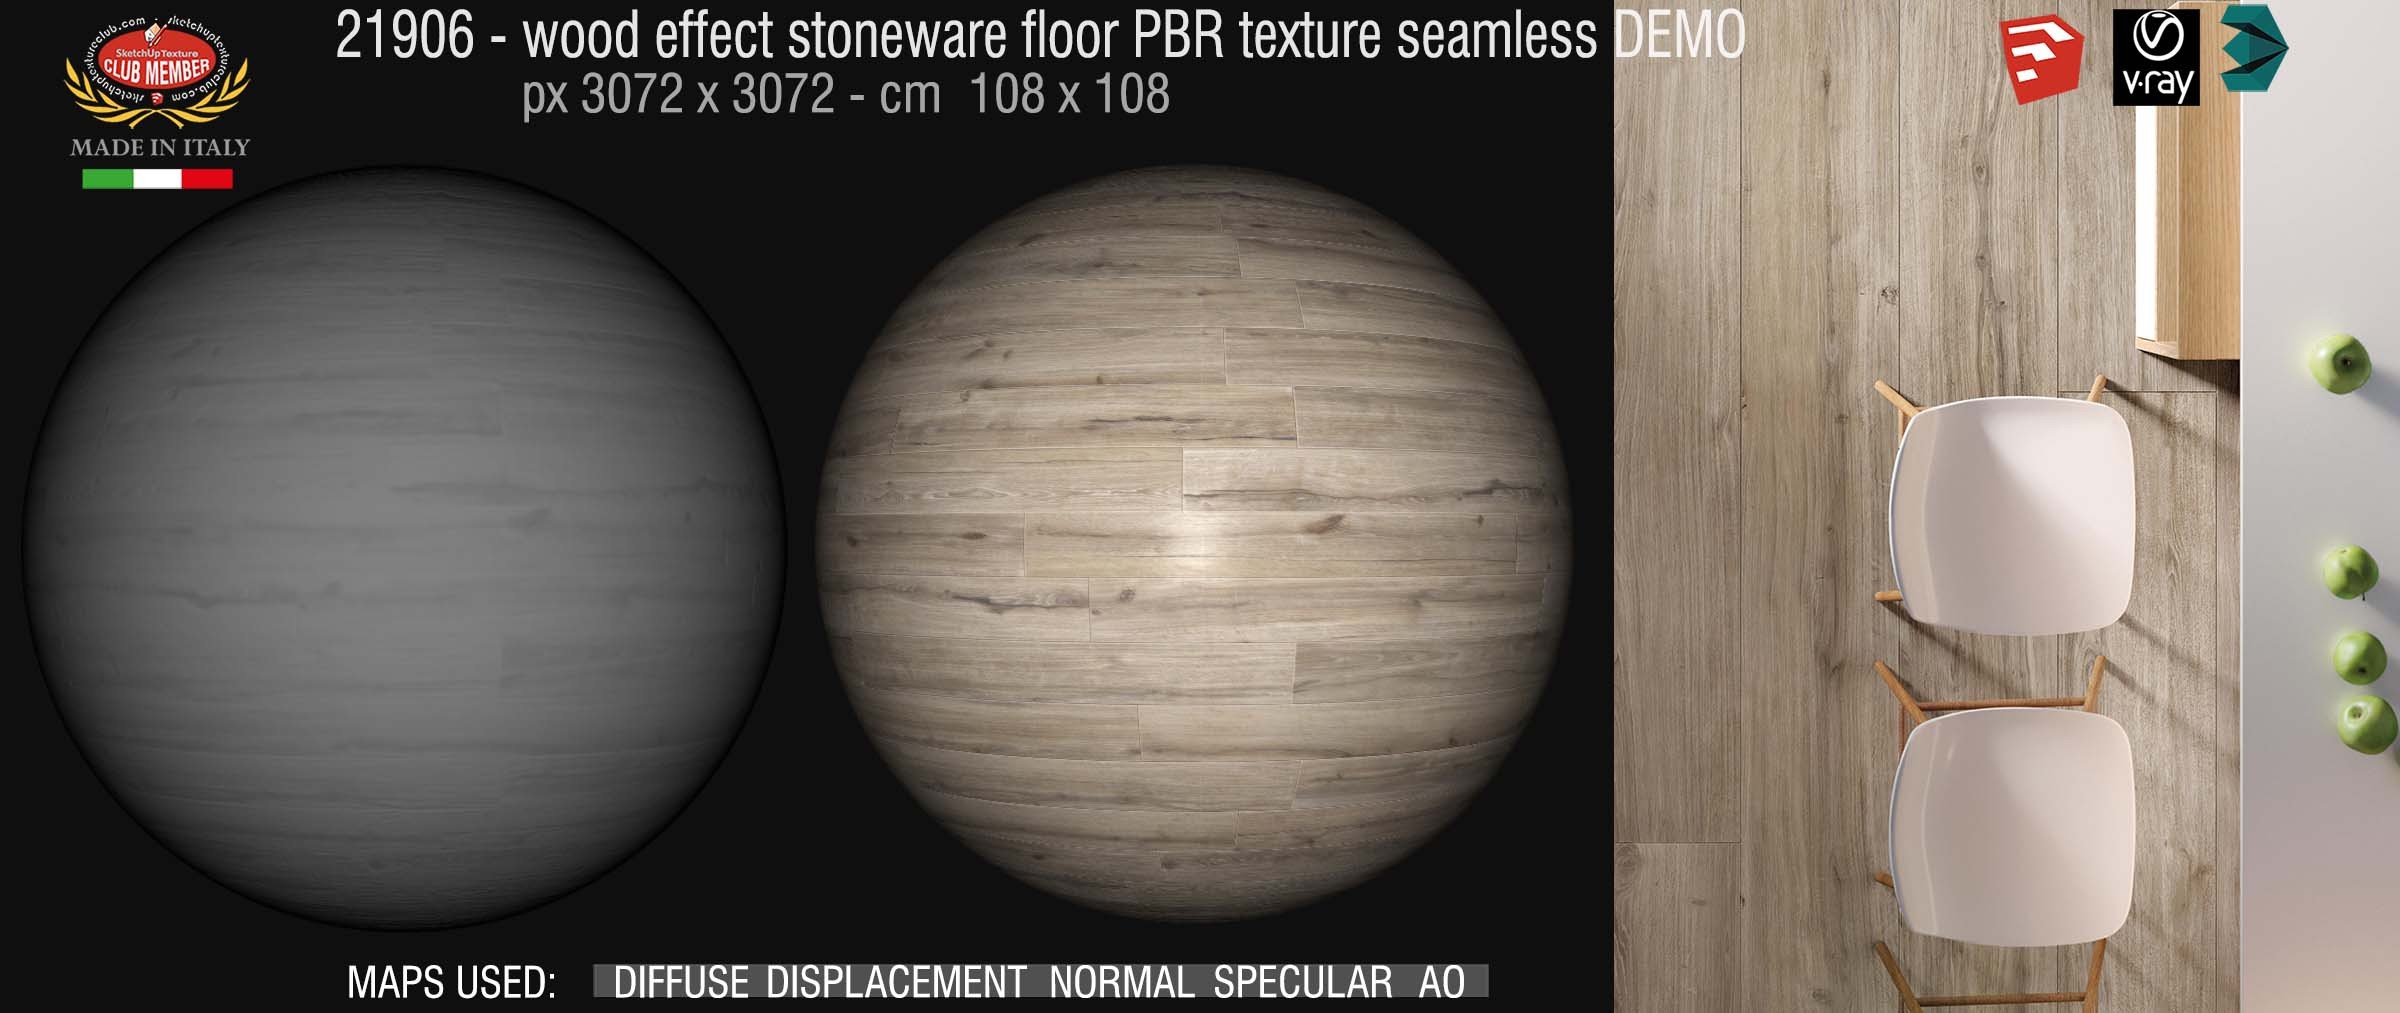 21906 wood effect stoneware floor PBR texture seamless DEMO